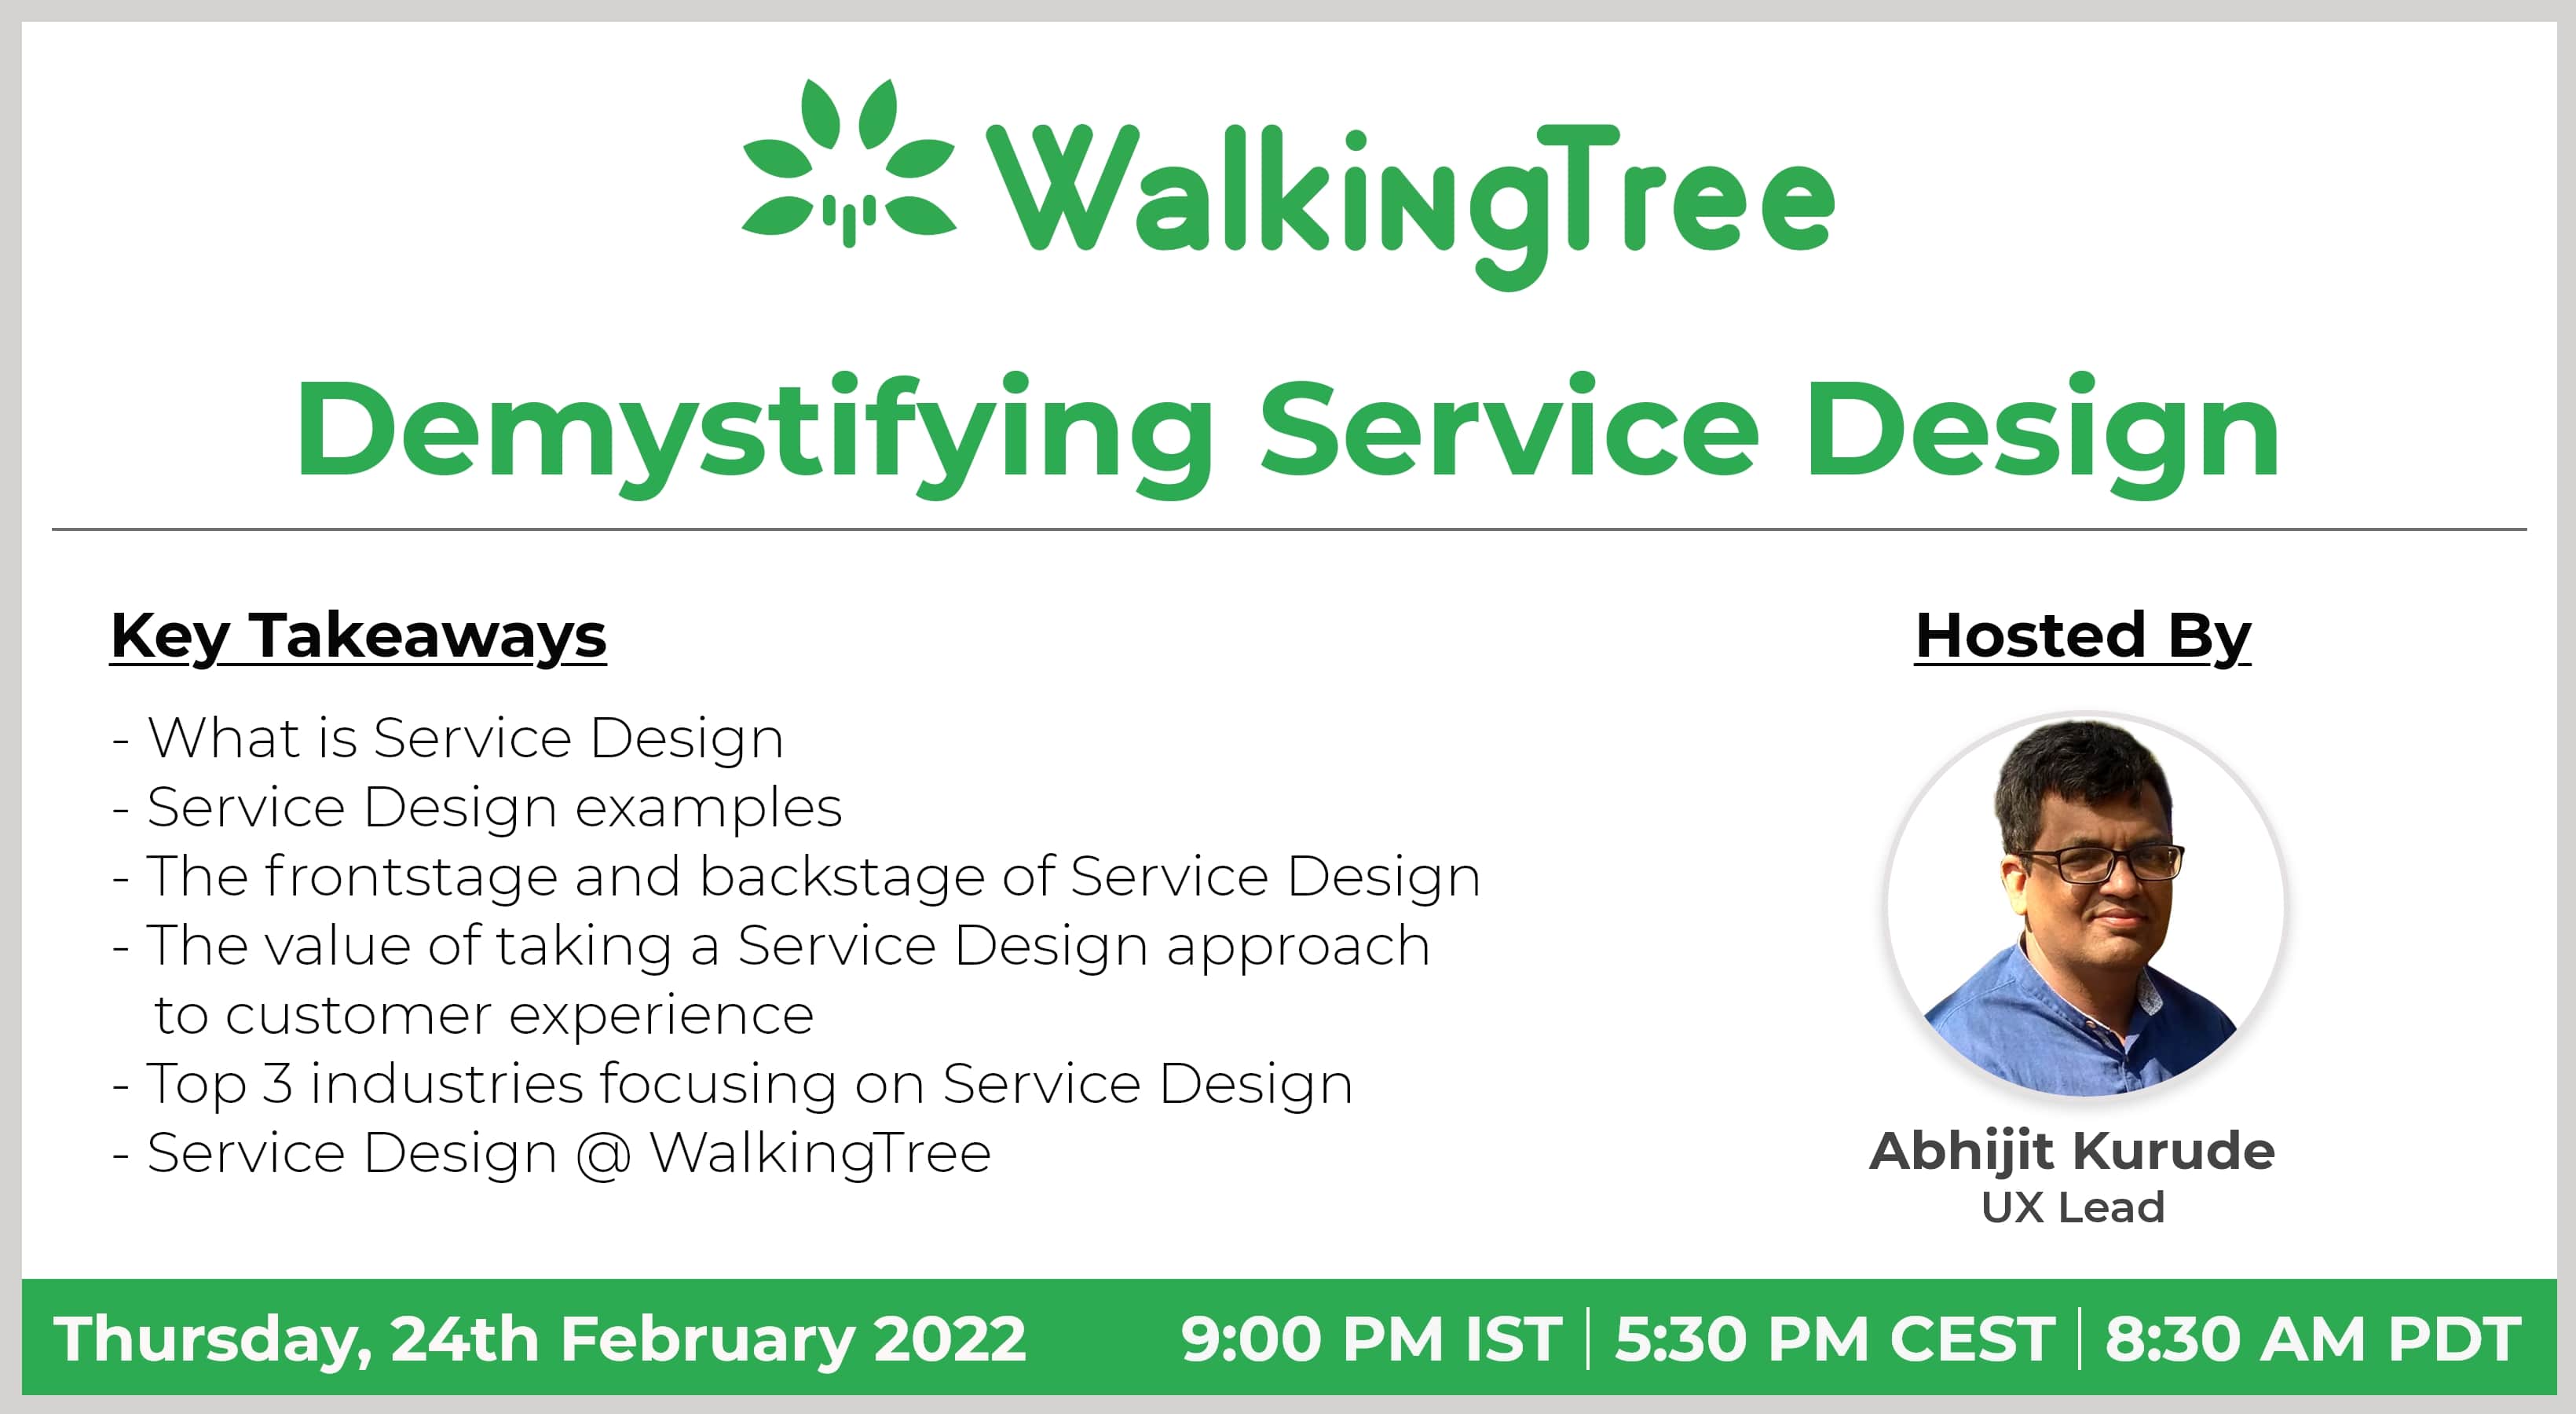 Demystifying Service Design, Online Event